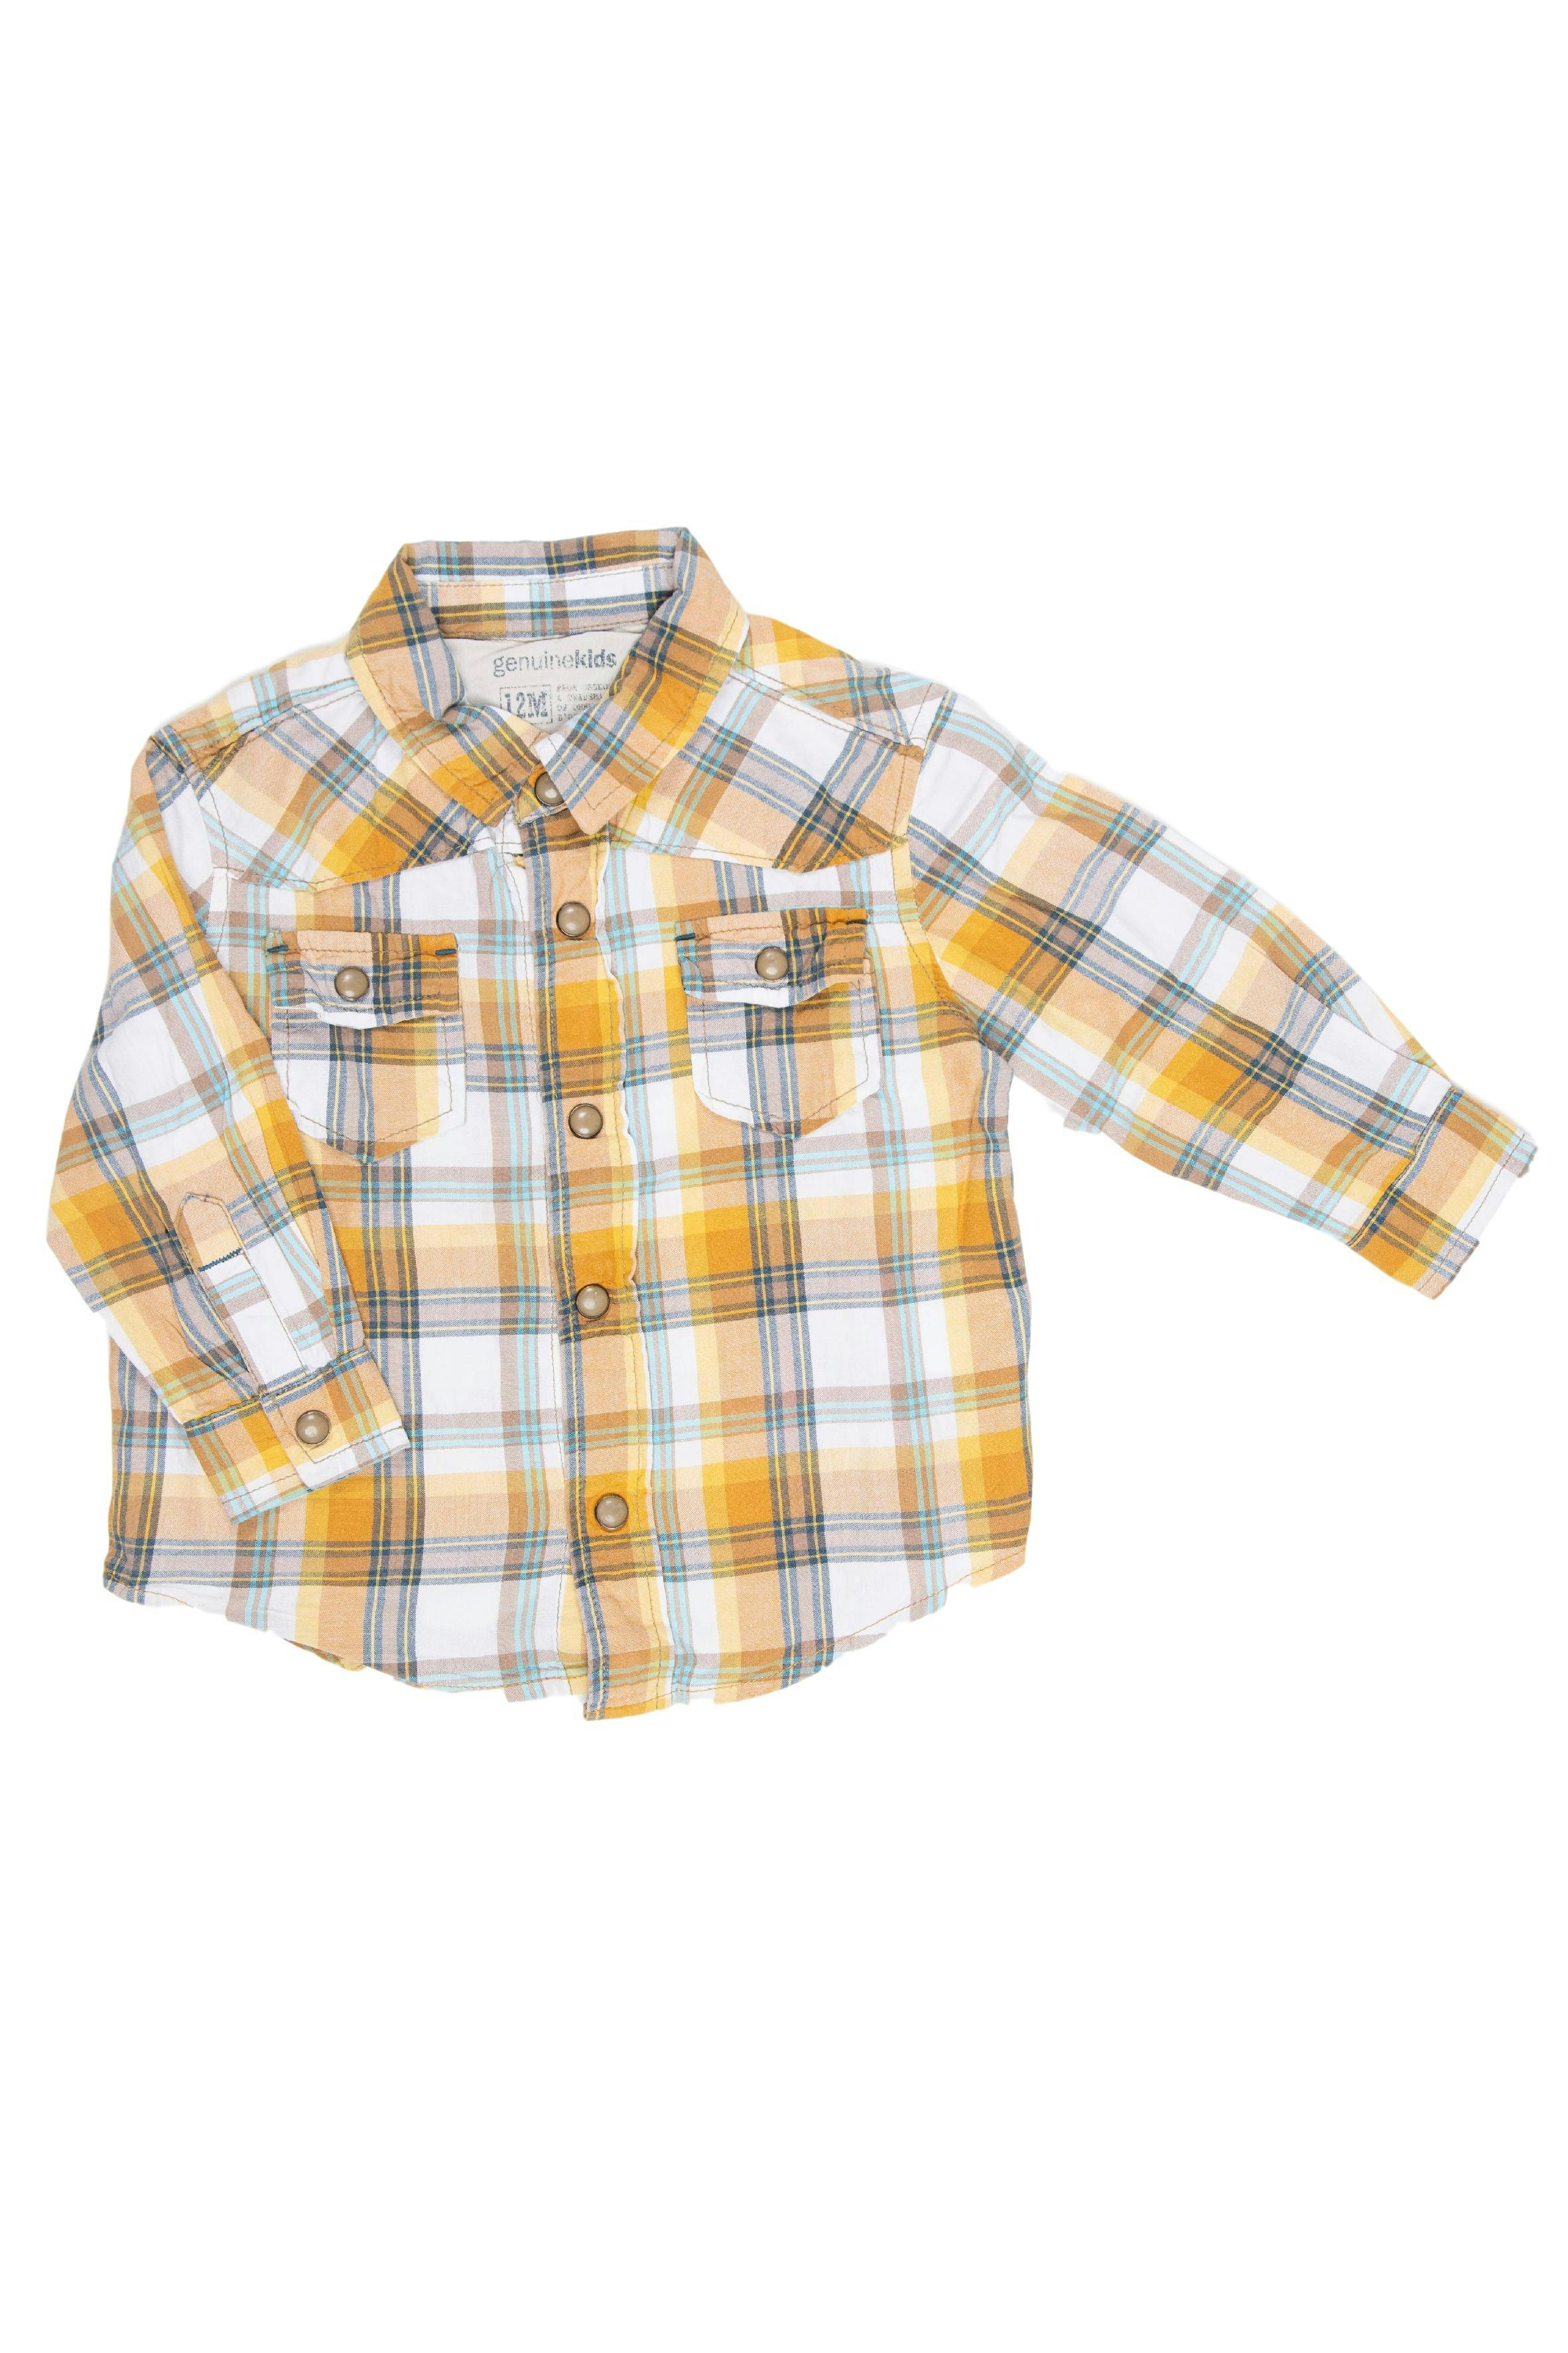 Camisa manga larga cuadros marron amarillo y blanco 100% algodón - Genuine Kids